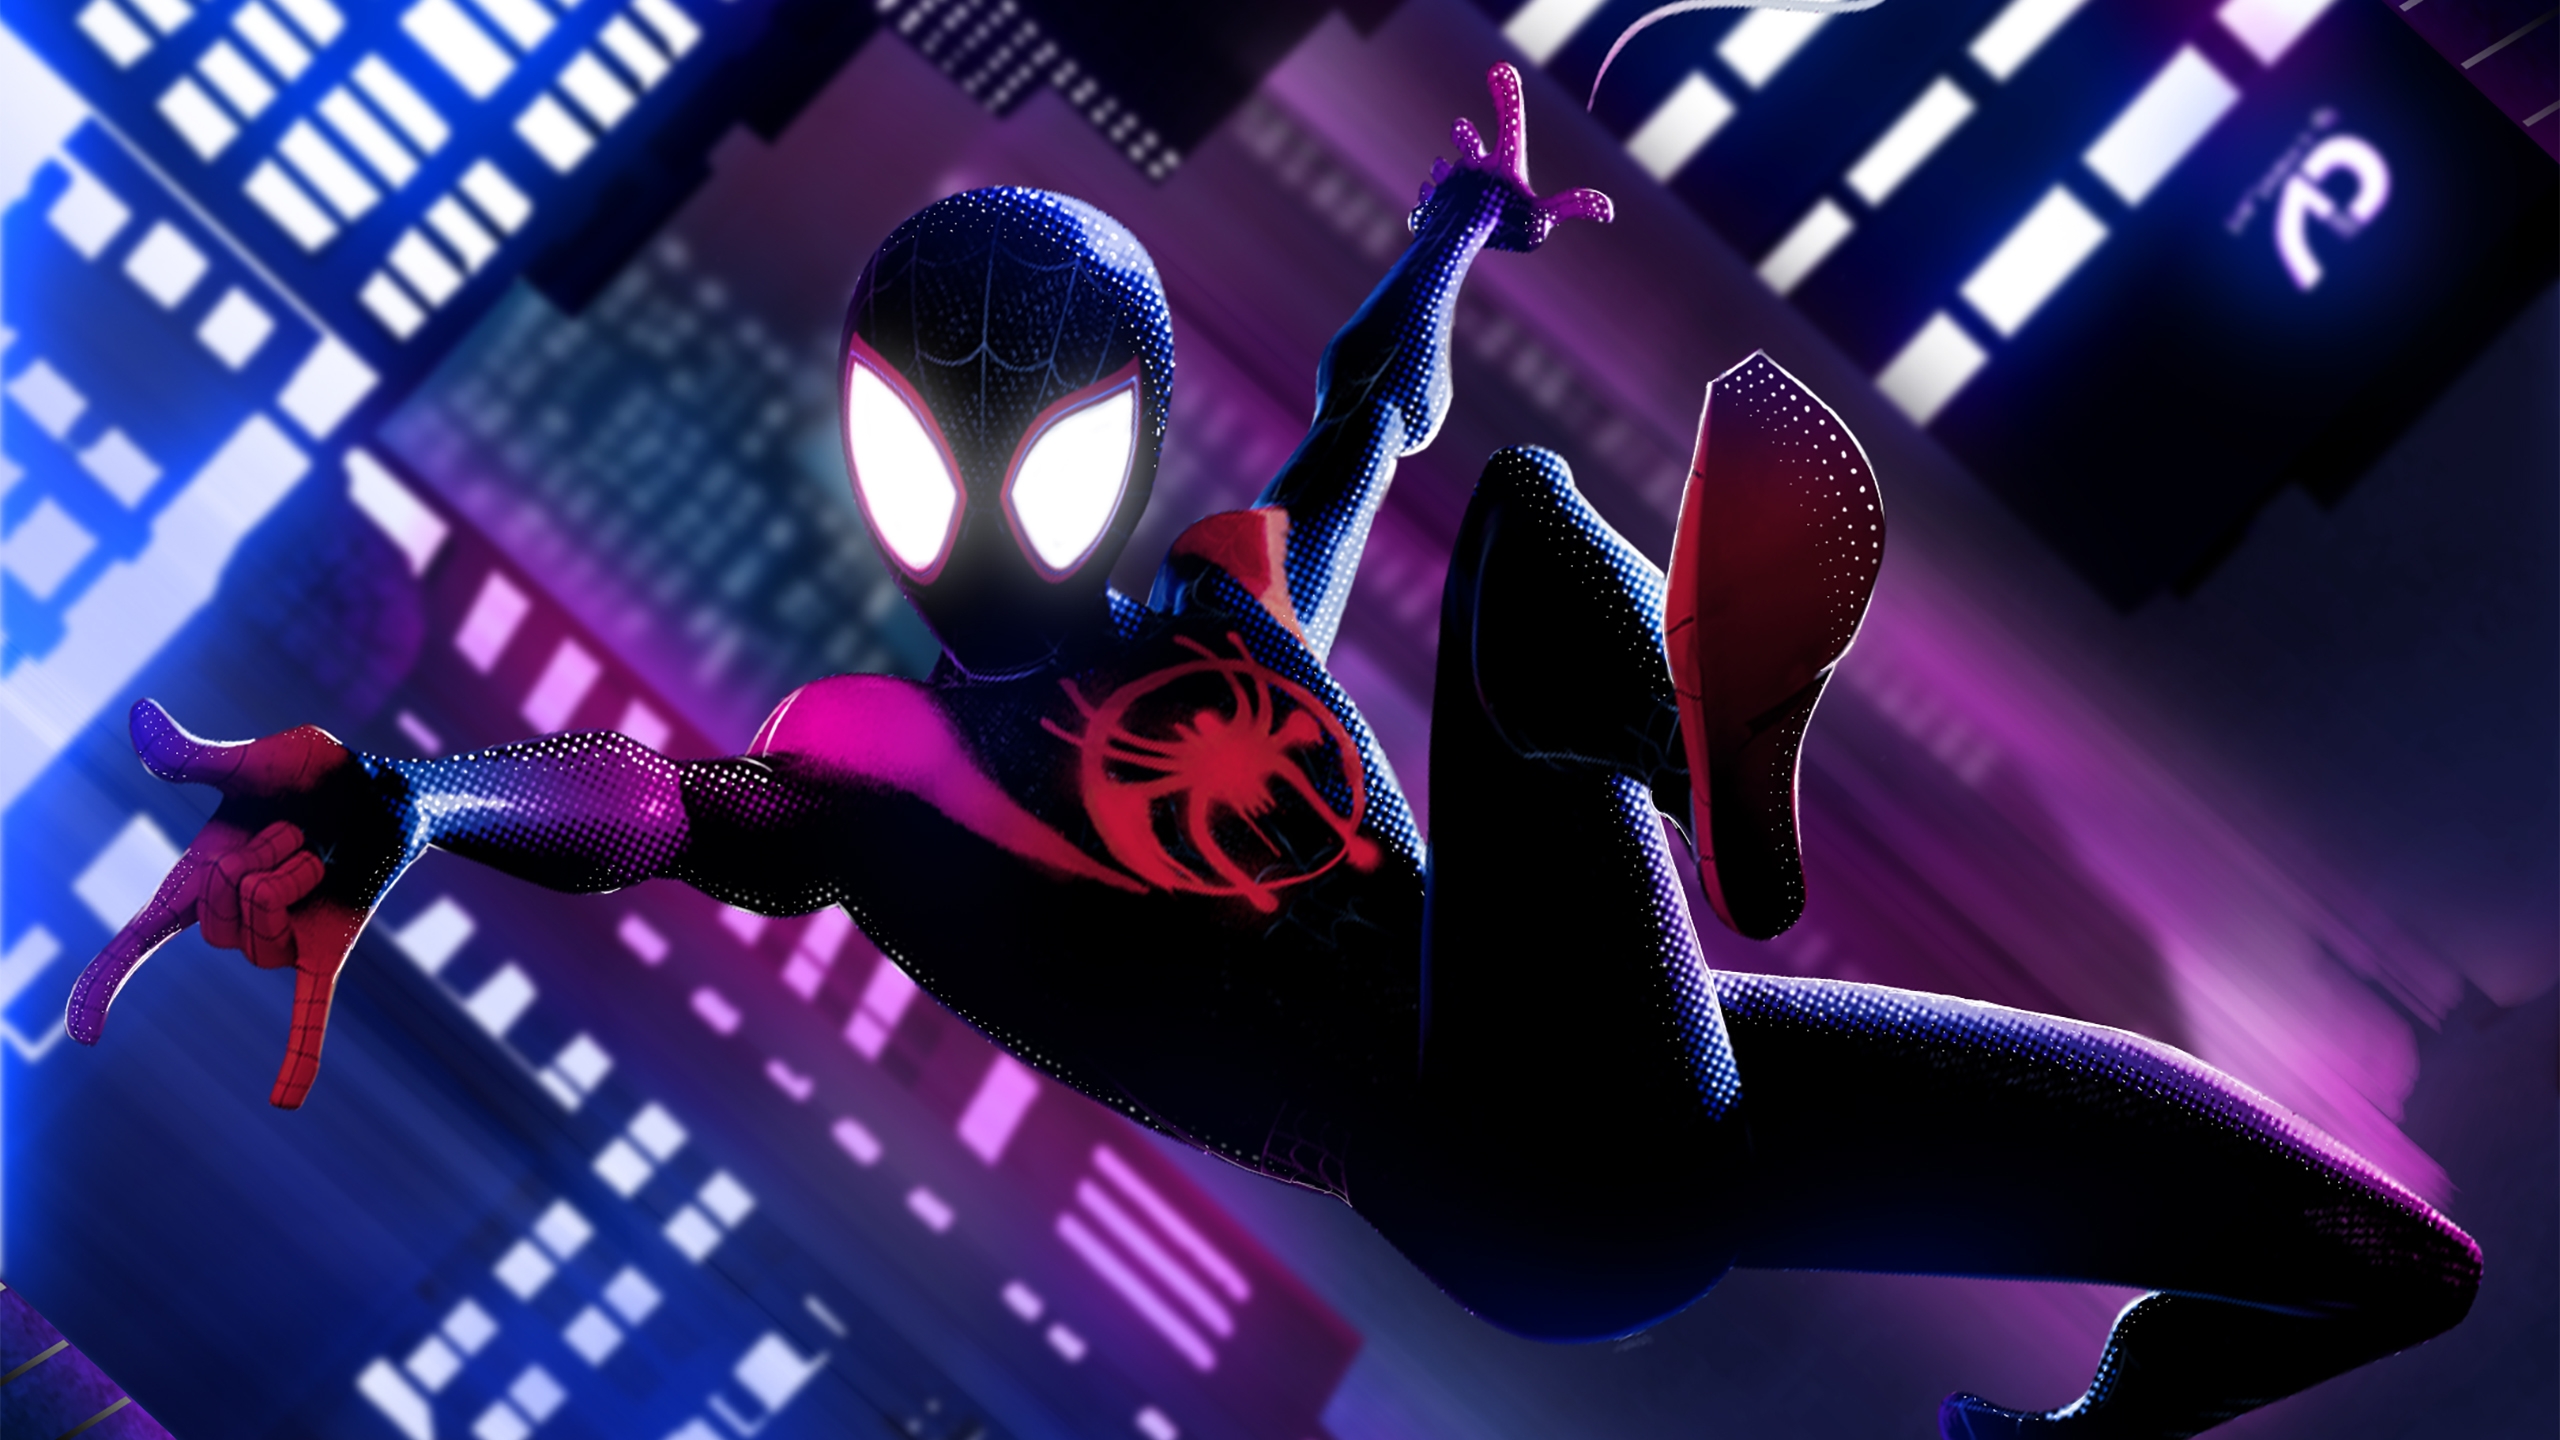 Spider-Man Neon Wallpapers - Wallpaper Cave